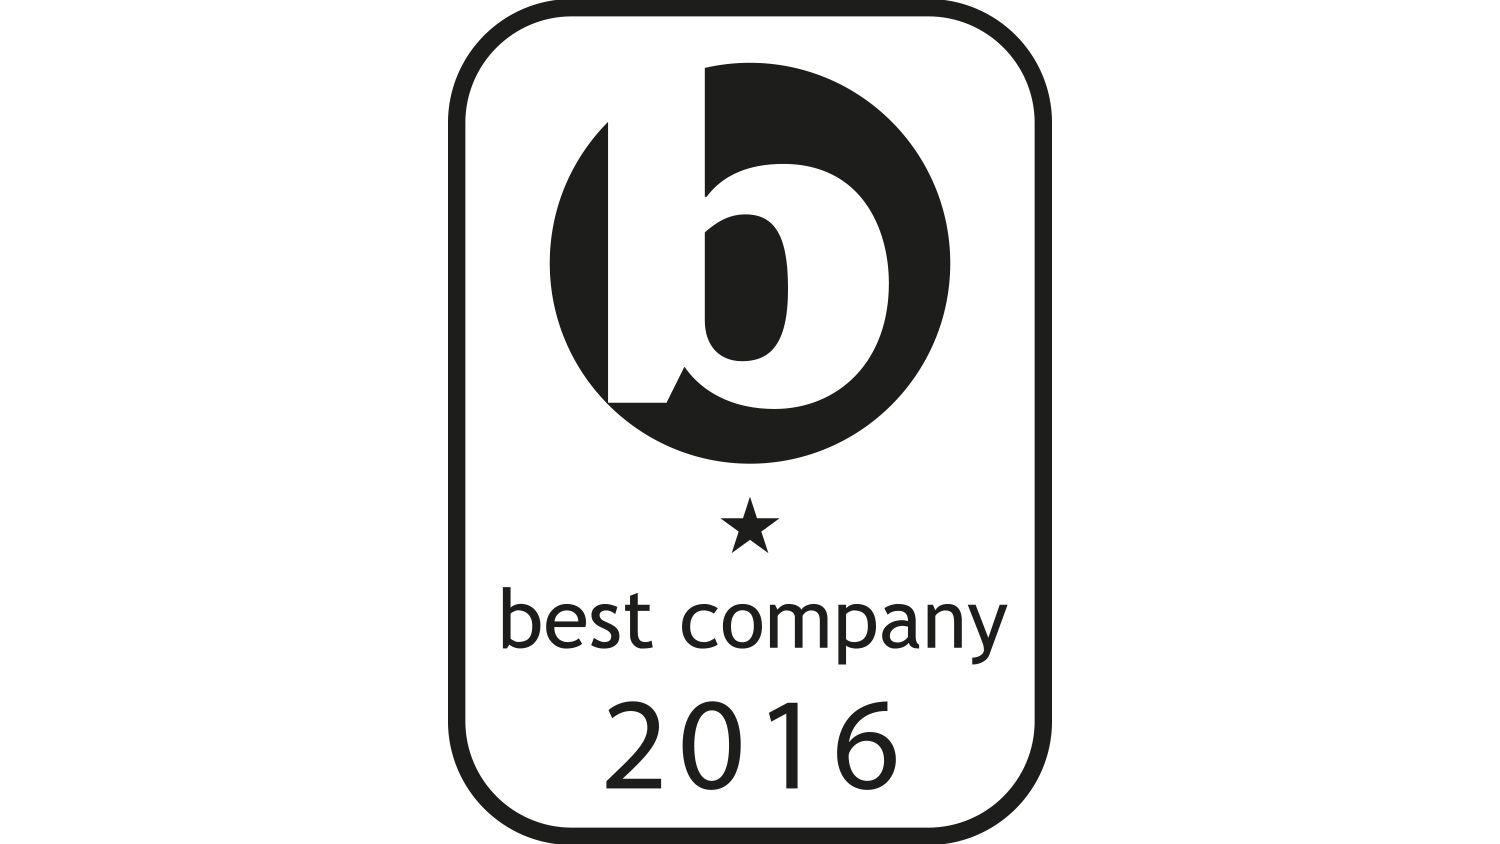 Best Company Logo - Best Companies 2016 Logo. Girls' Day School Trust